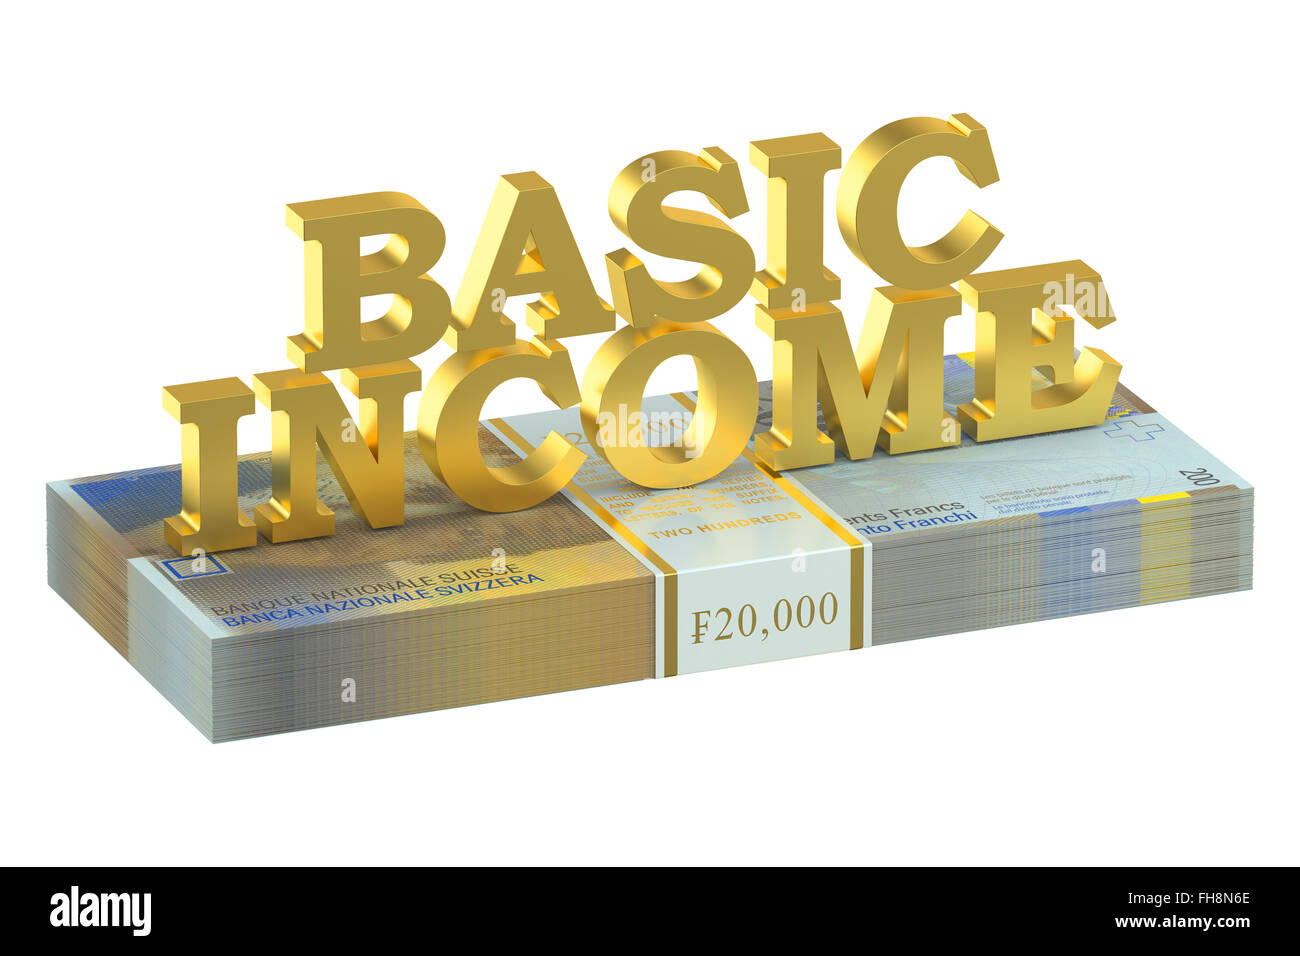 switzerland basic income concept Stock Photo